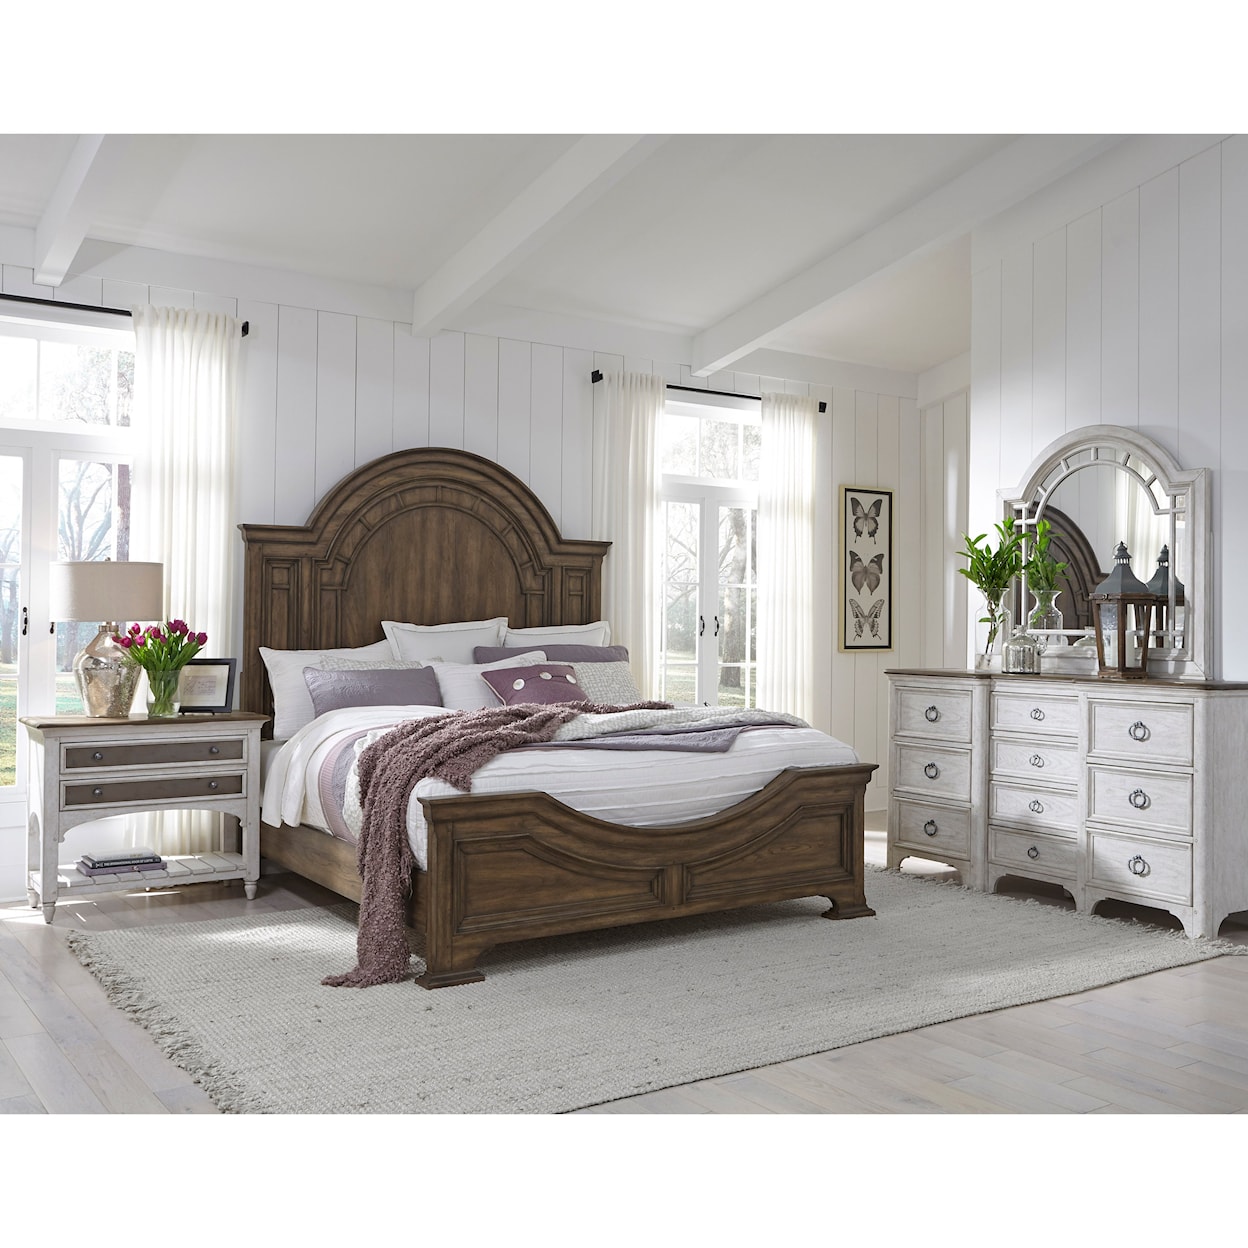 Pulaski Furniture Glendale Estates Queen Bed